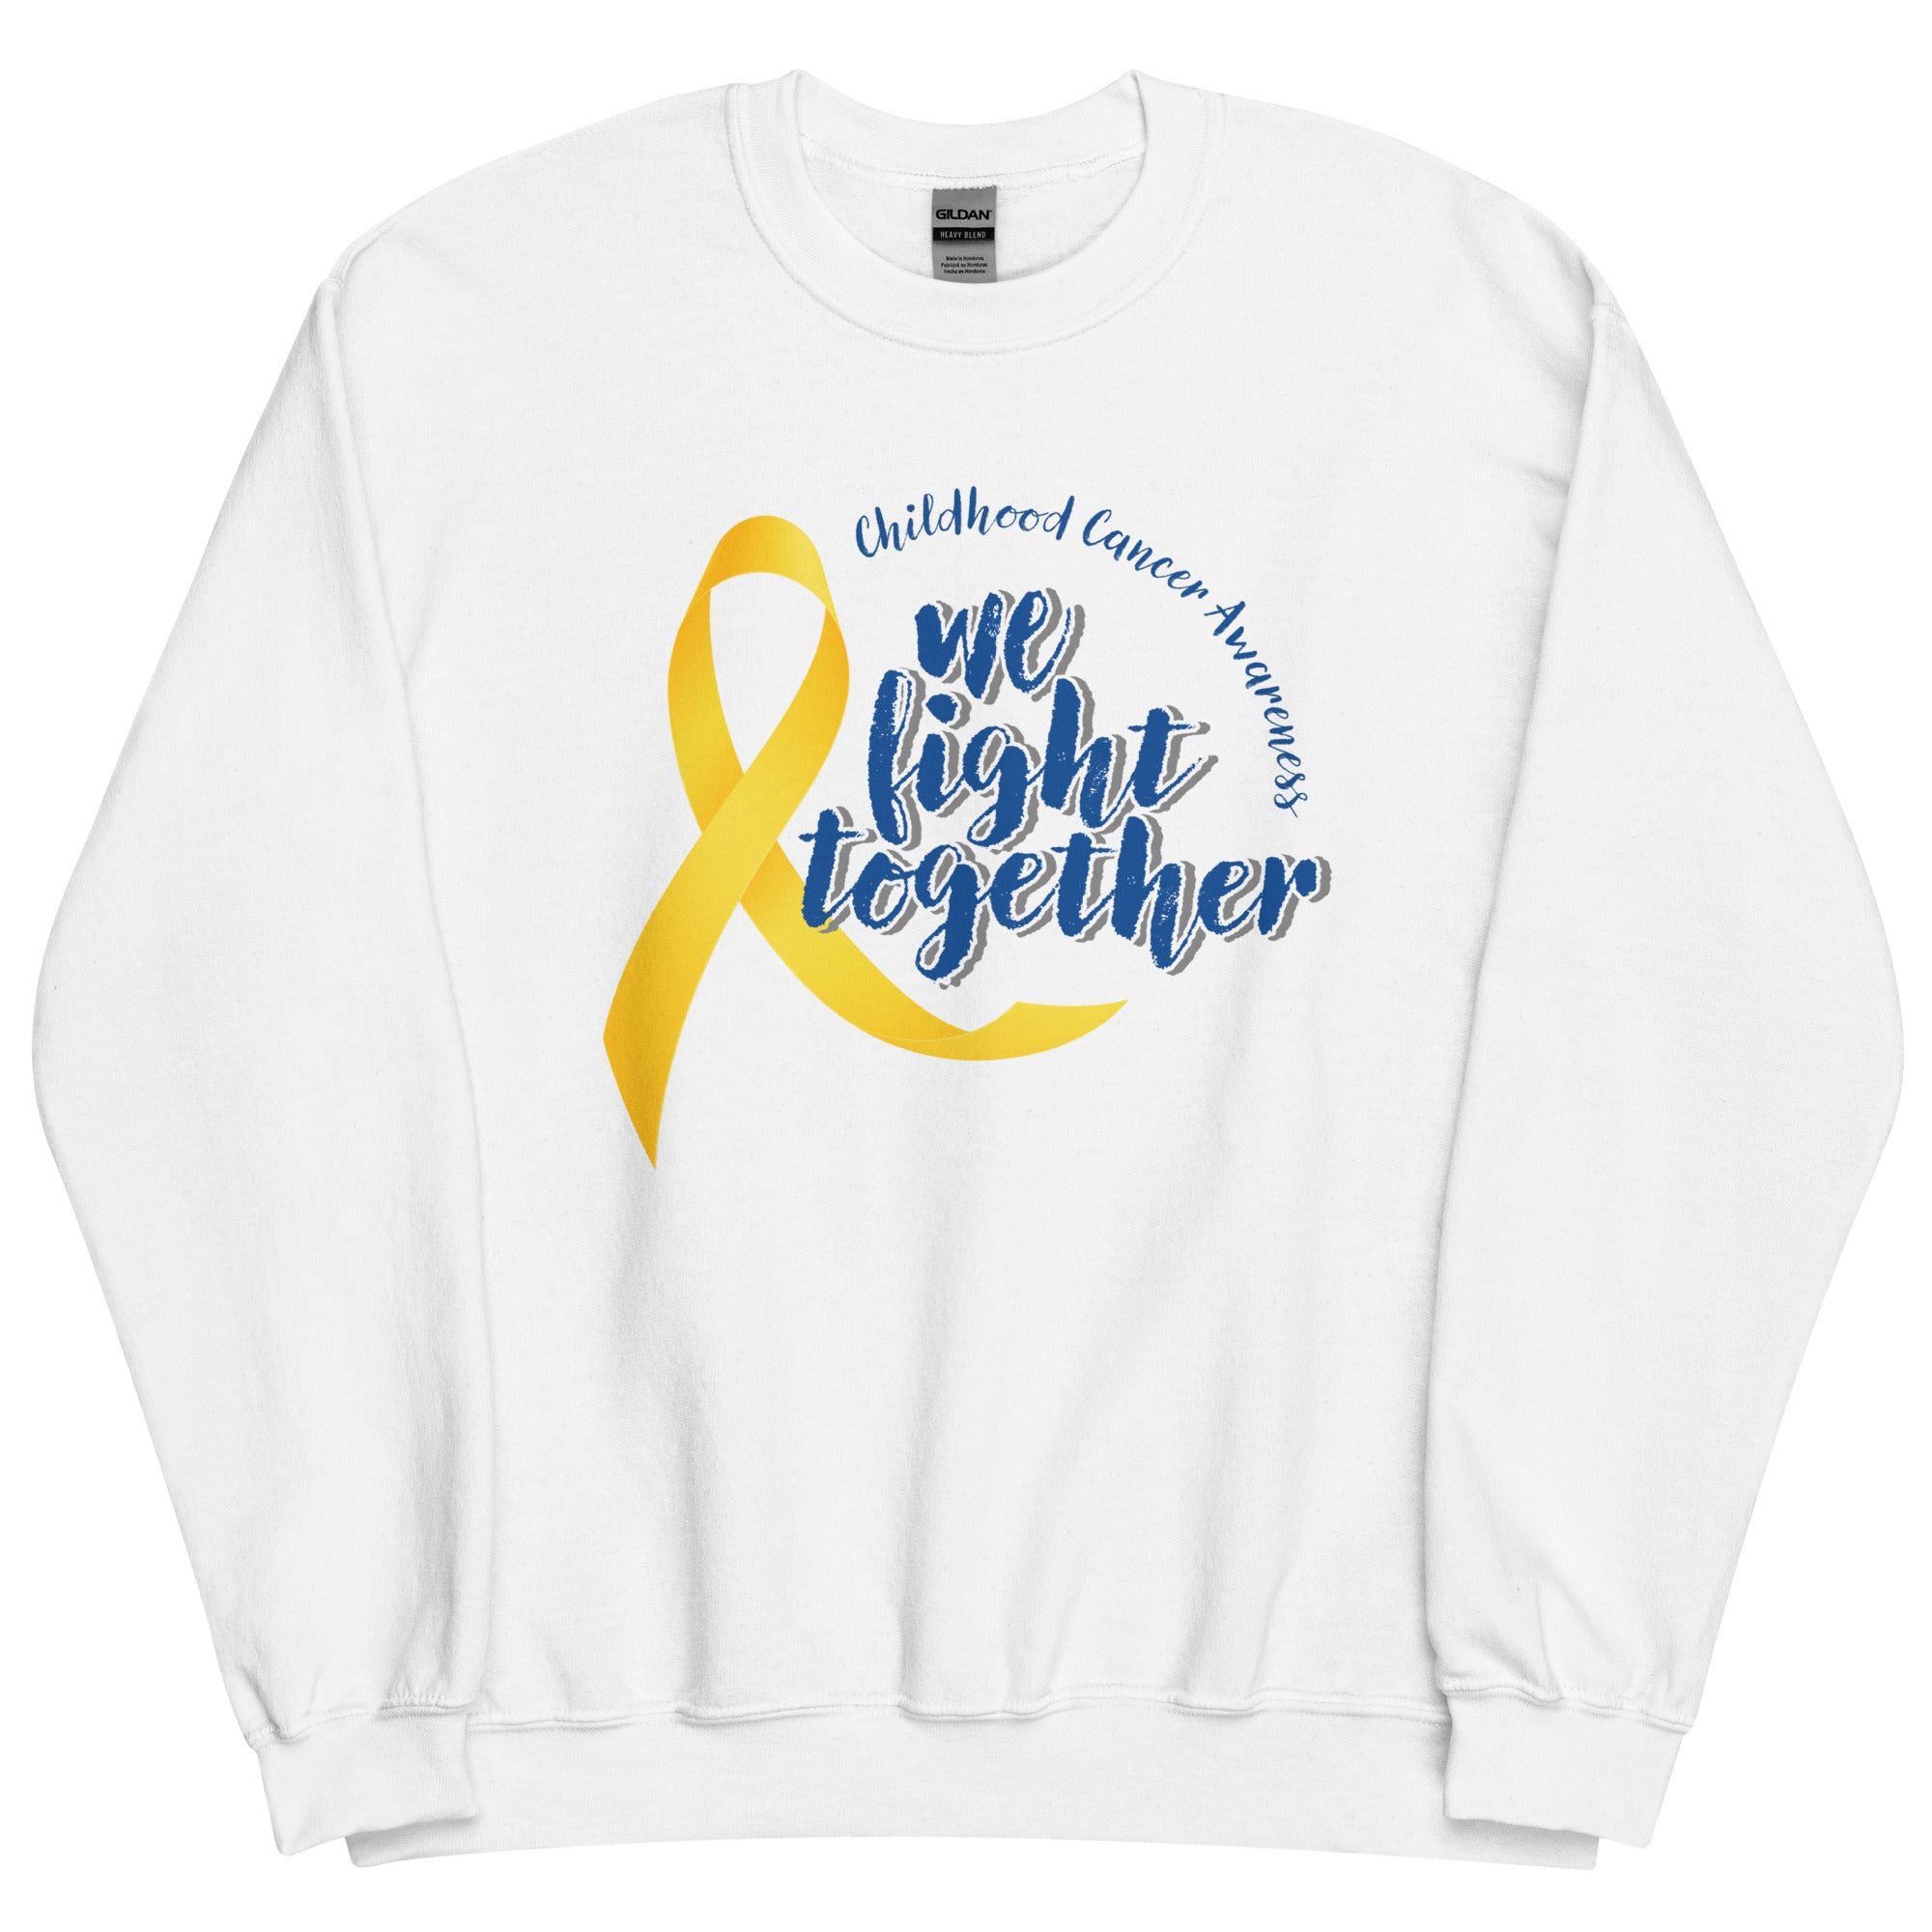 We Fight Together - Unisex Sweatshirt White